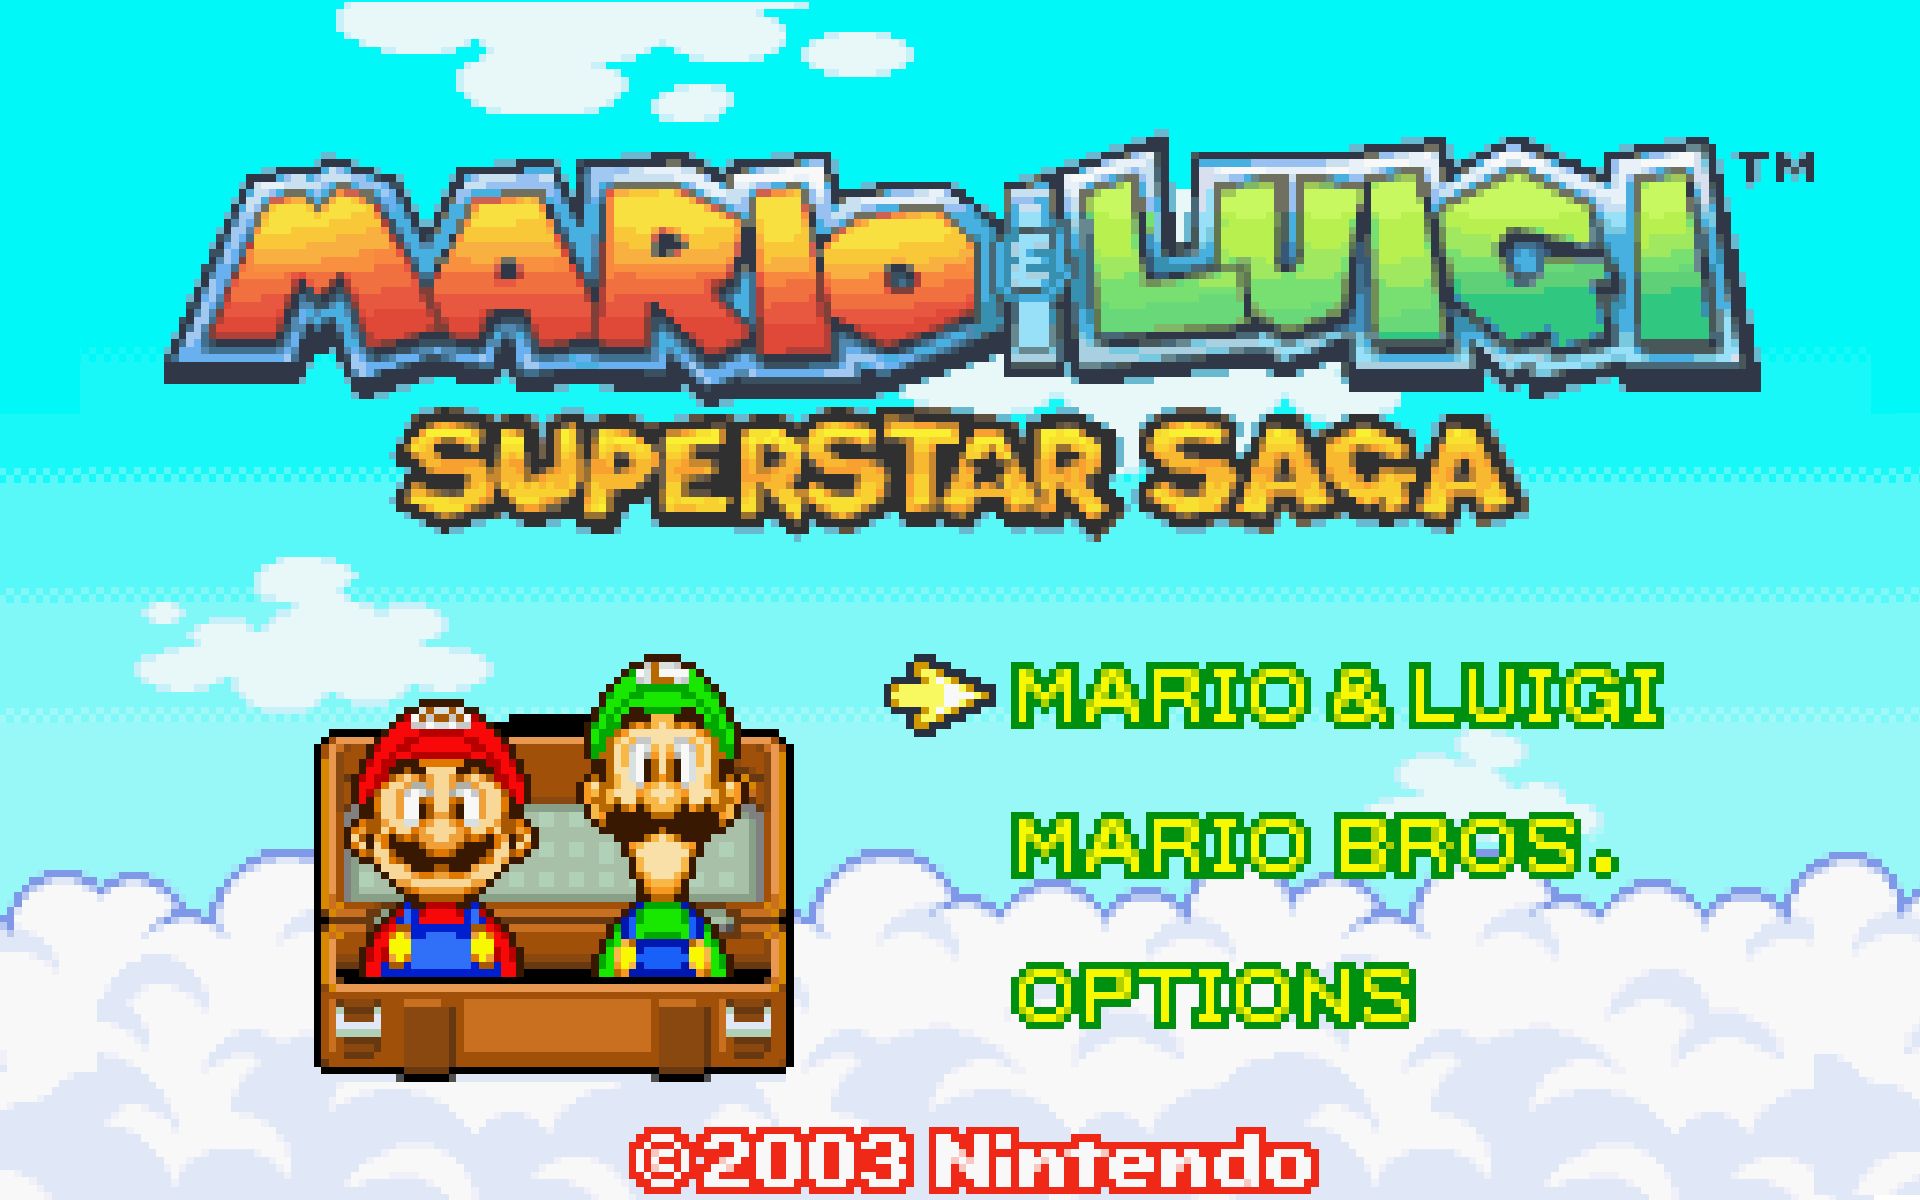 Mario and luigi saga. Марио и Луиджи: сага о суперзвездах. Марио и Луиджи суперстар сага. Суперзвезда Марио. Mario and Luigi Superstar Saga Rus.